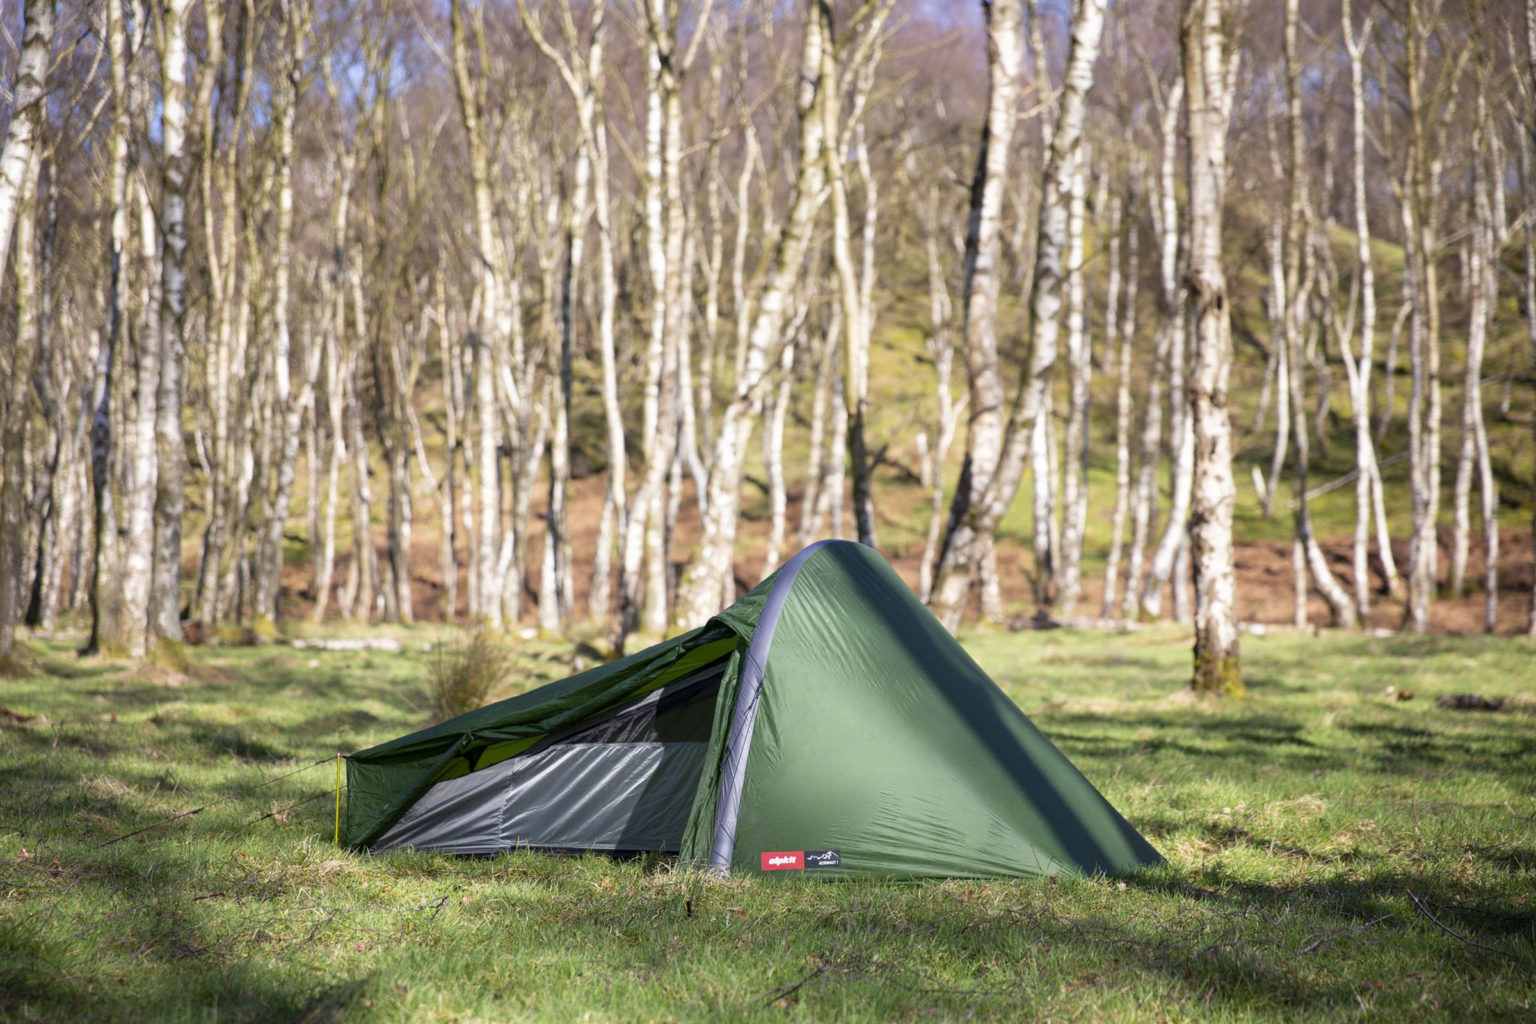 Alpkit's New Pole-Free Tents: Aeronaut and Polestar - BIKEPACKING.com